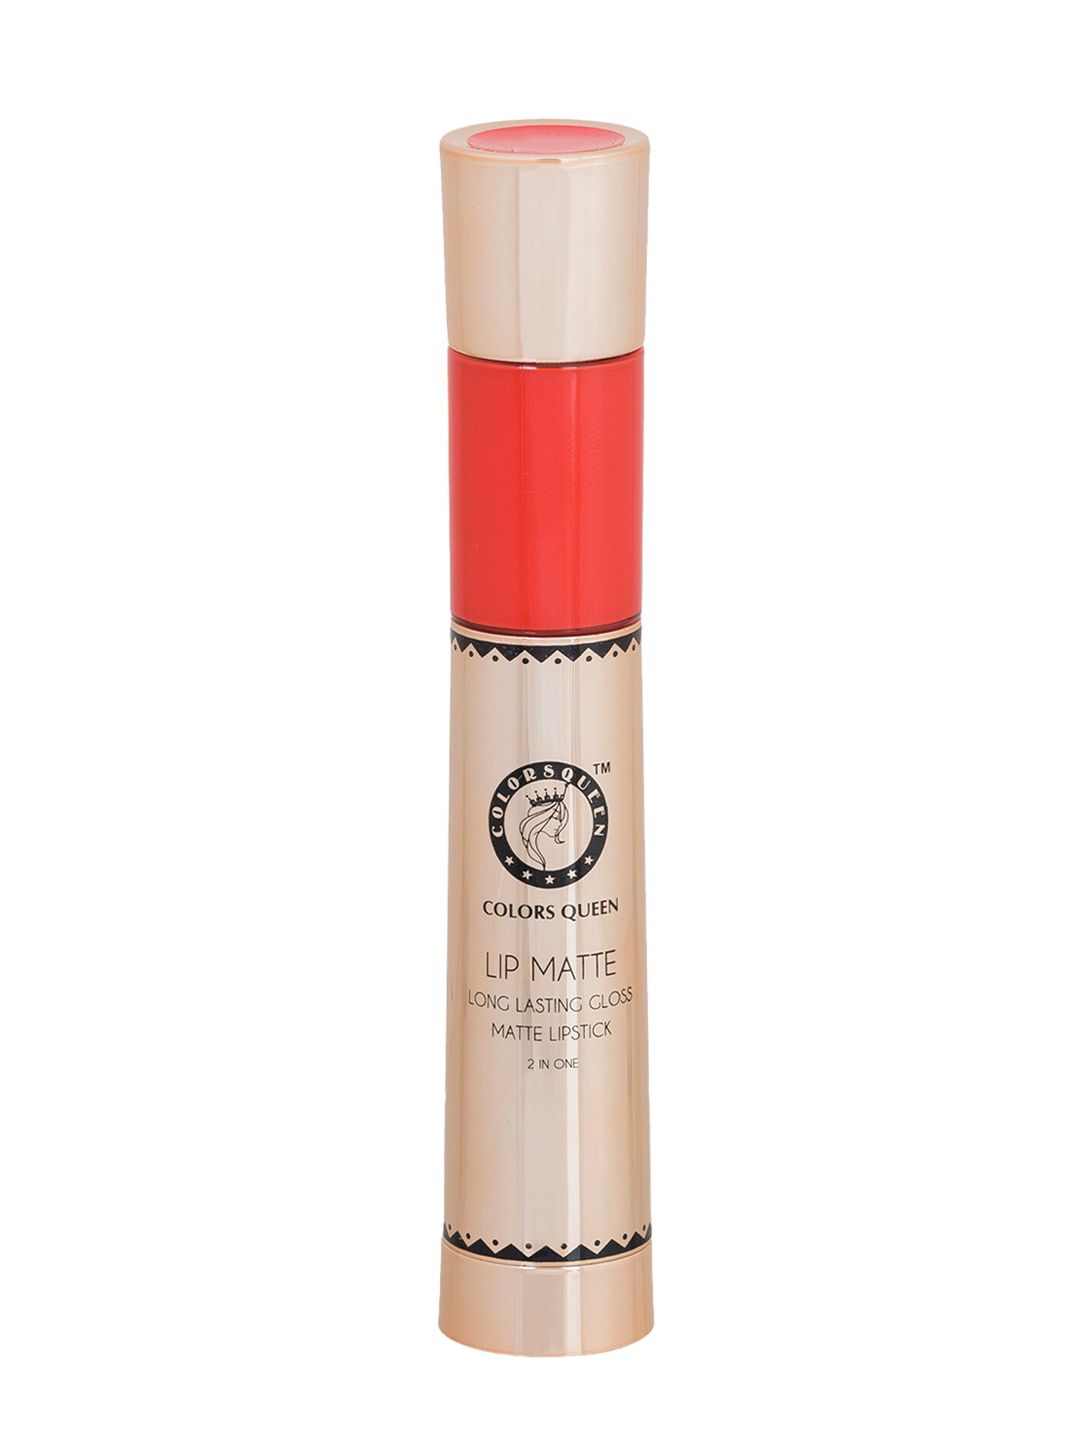 Colors Queen Lip Matte Long Lasting Gloss 2 in 1 Lipstick 8 g - Orange Price in India